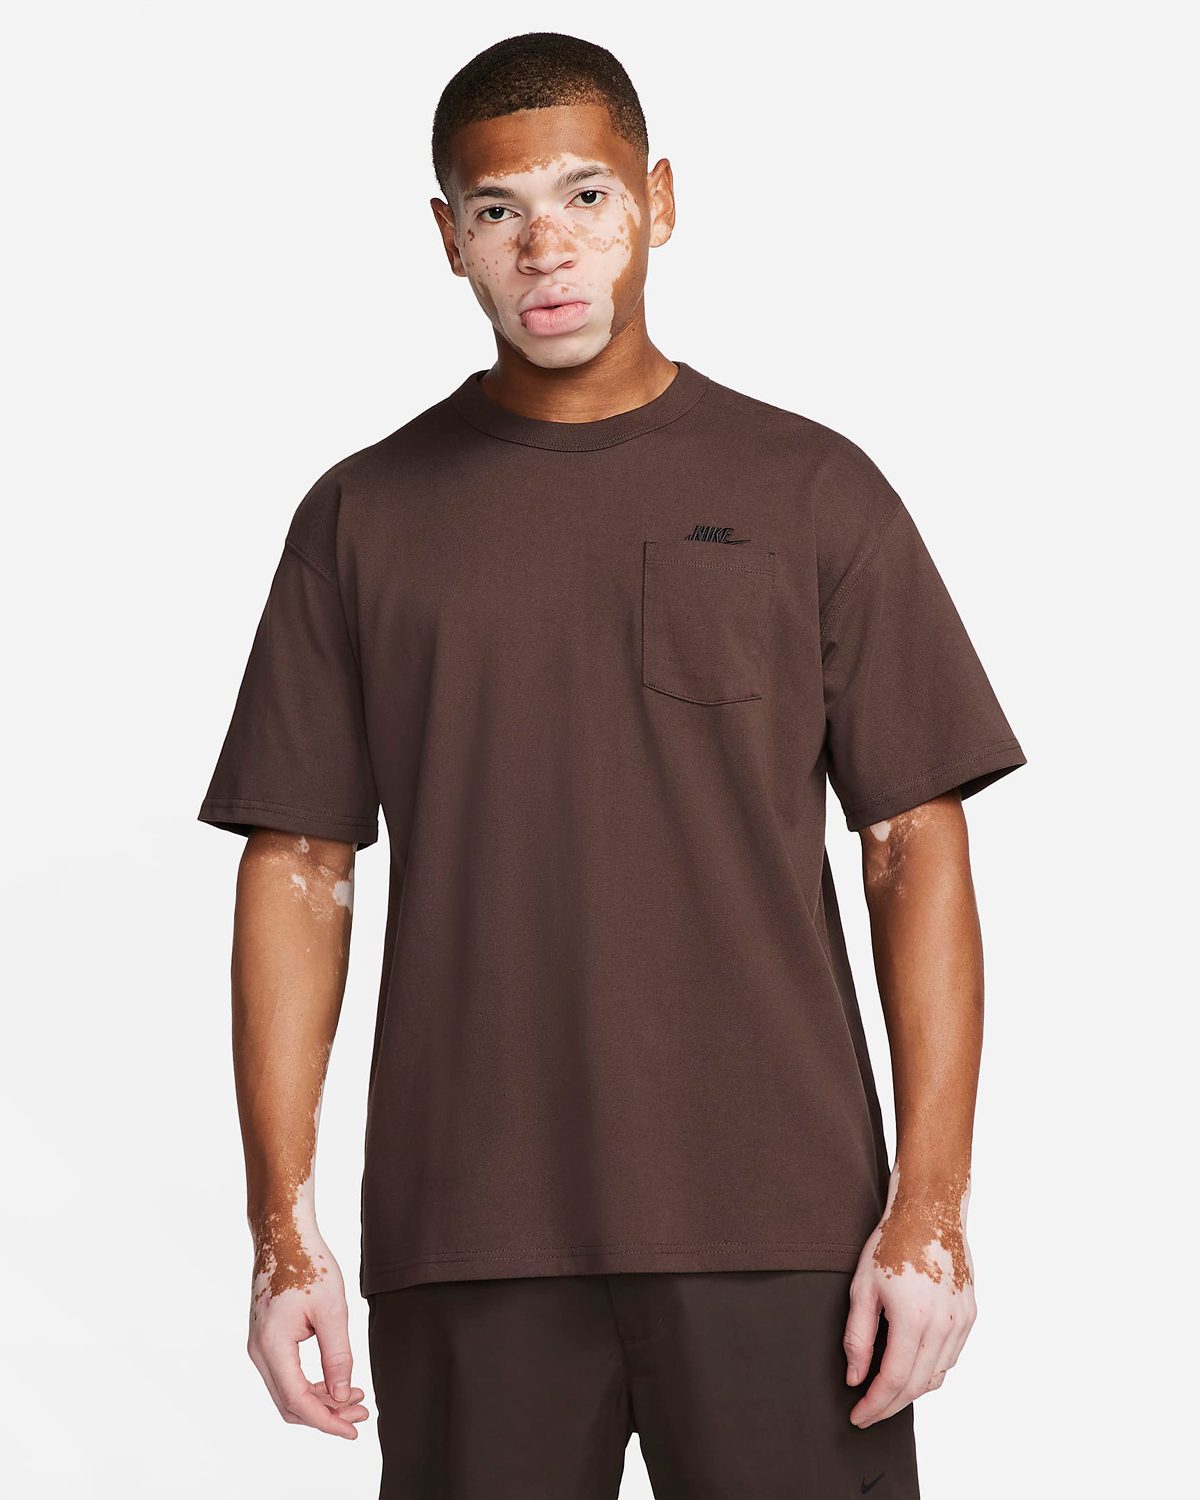 Nike-Sportswear-Premium-Pocket-T-Shirt-Baroque-Brown